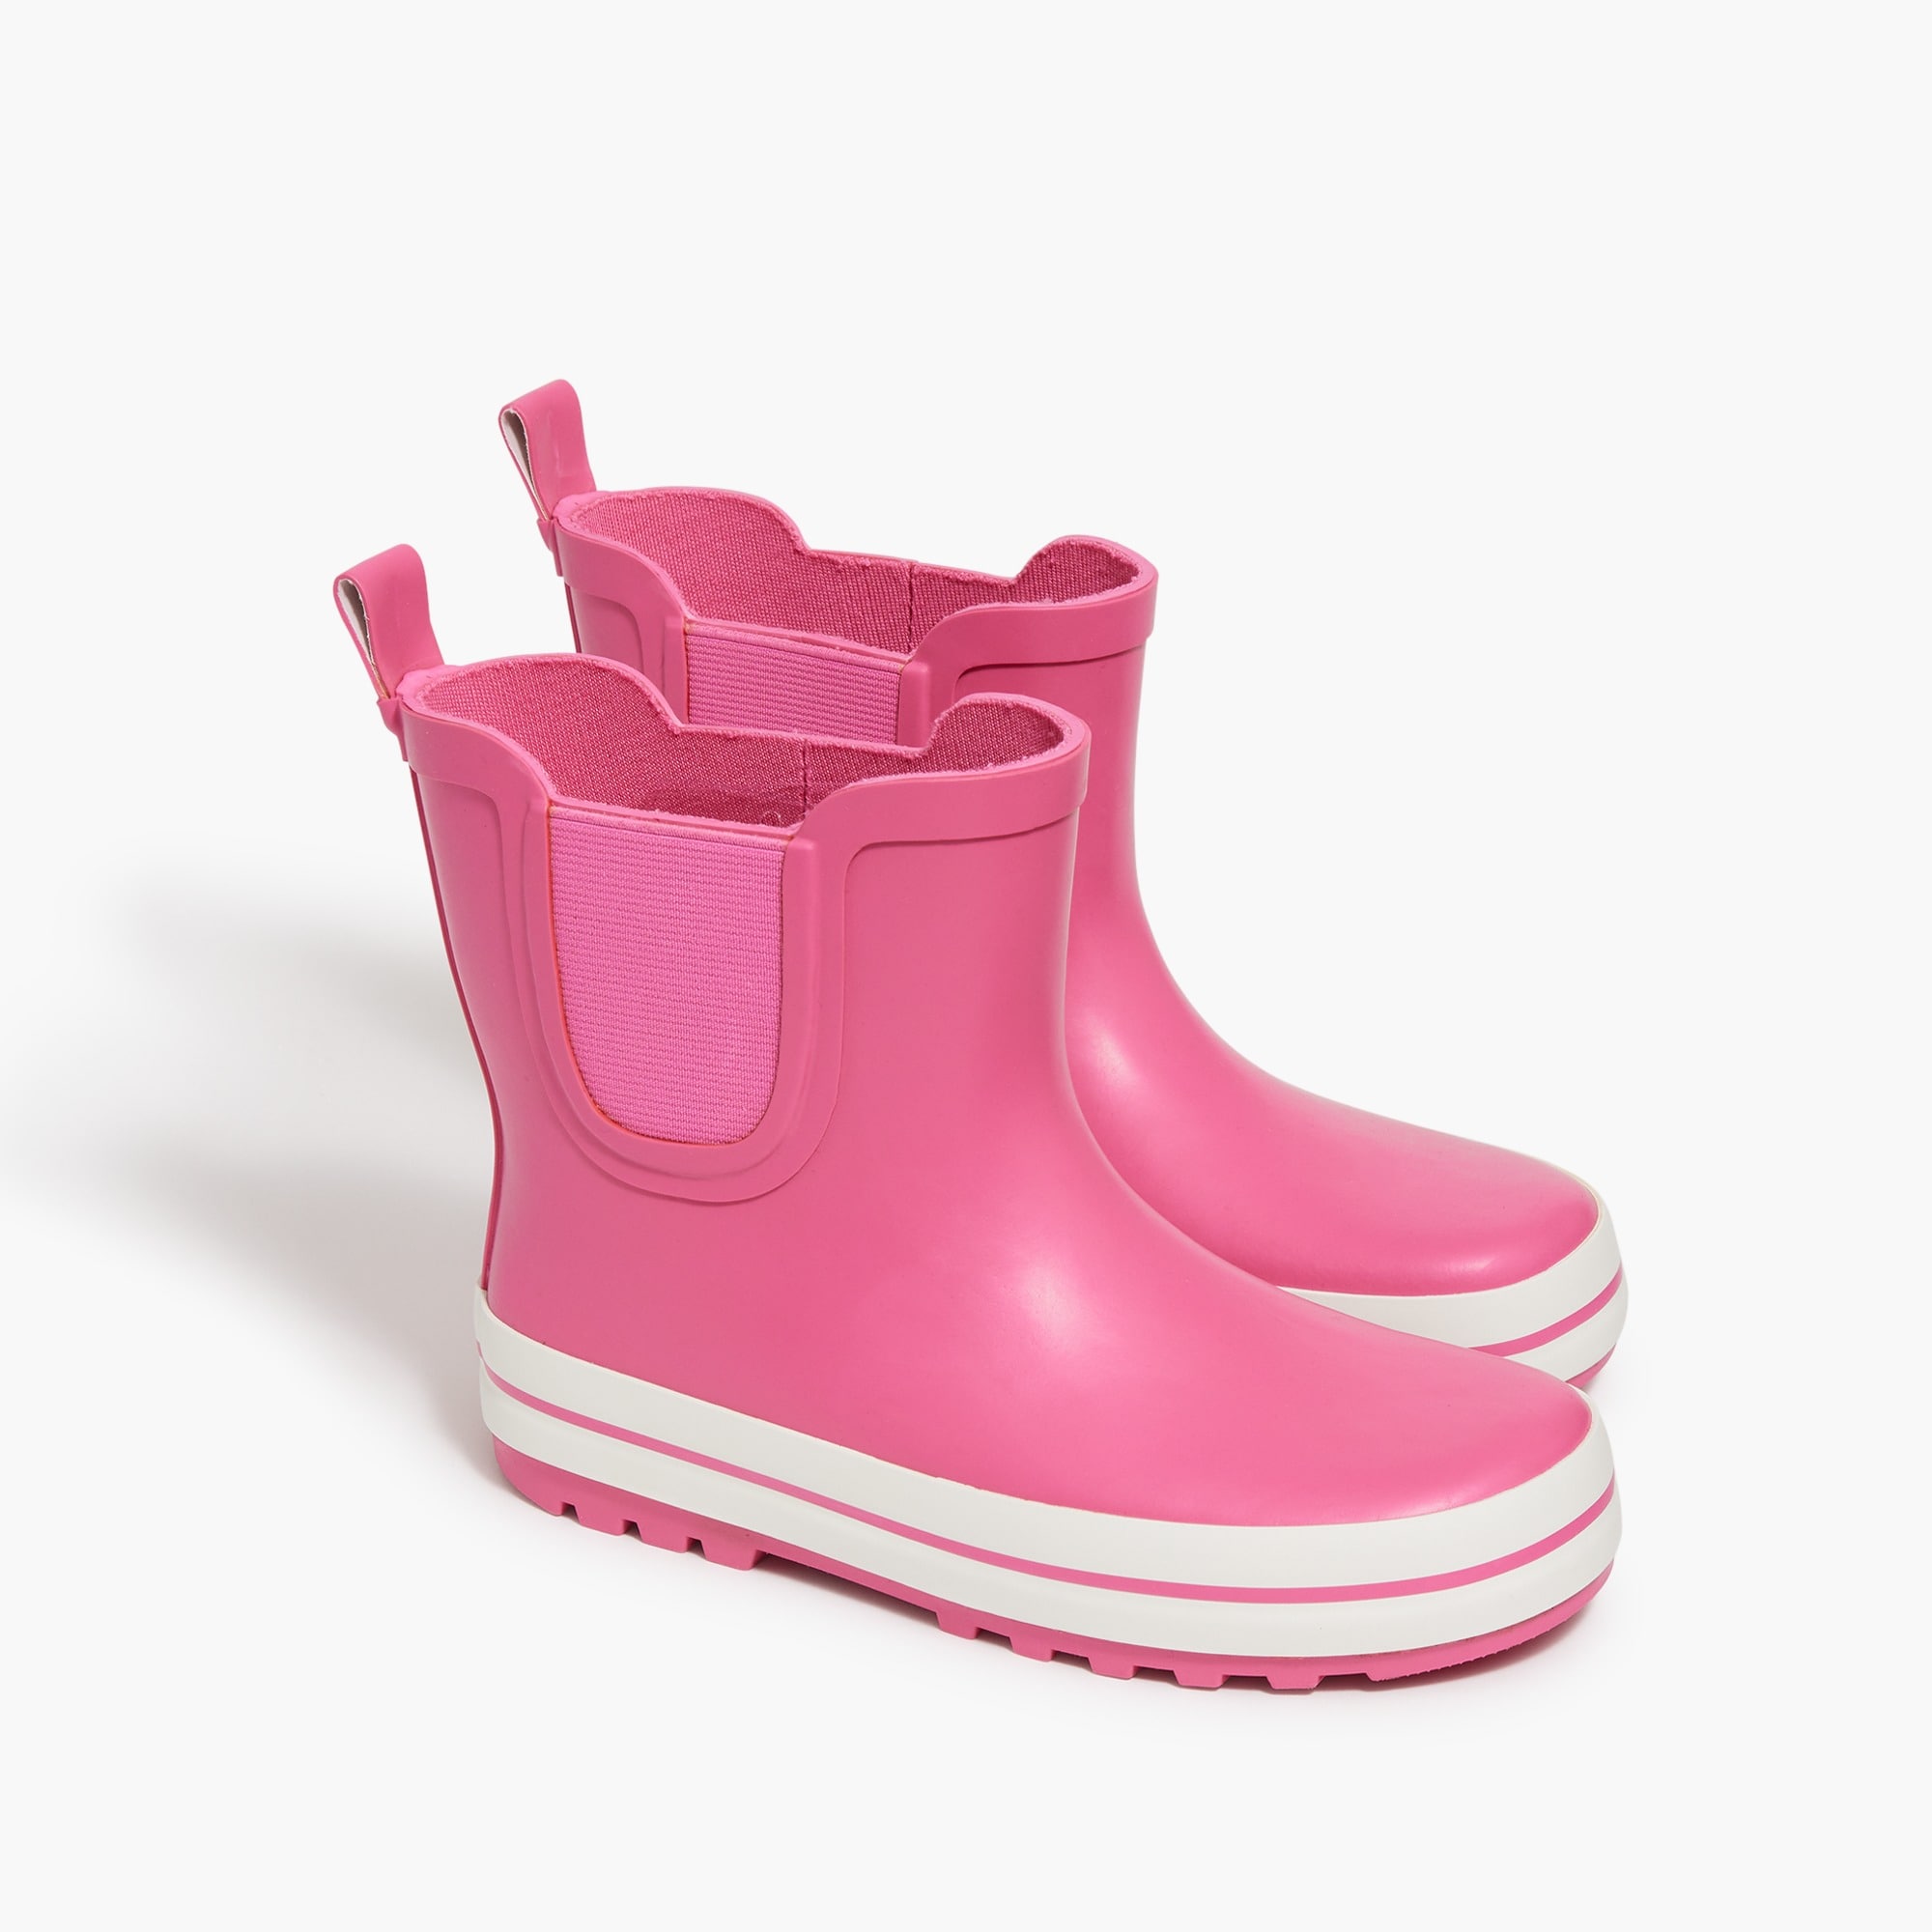 Jcrew Kids rain boots